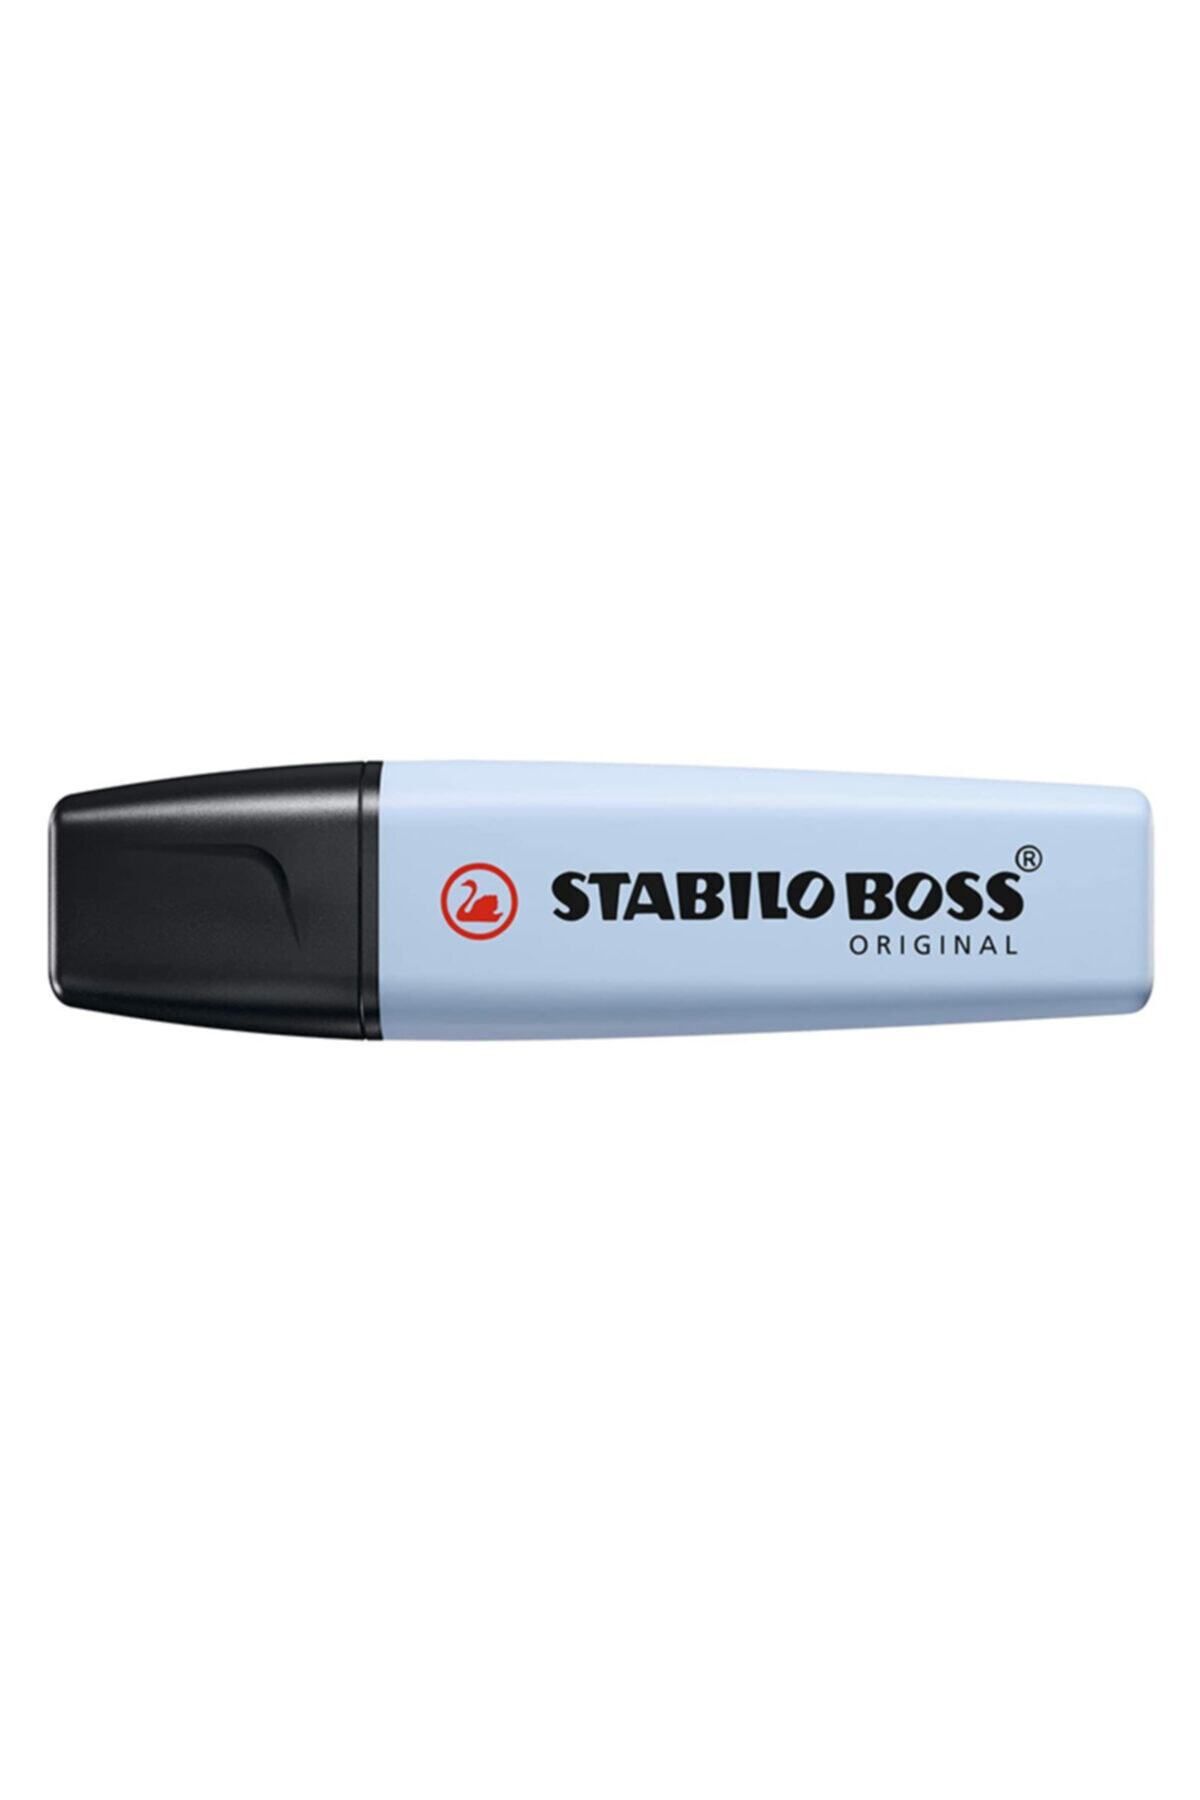 Stabilo Boss Original Cloud Blue Pastel İşaretleme Kalemi Pastel Mavi